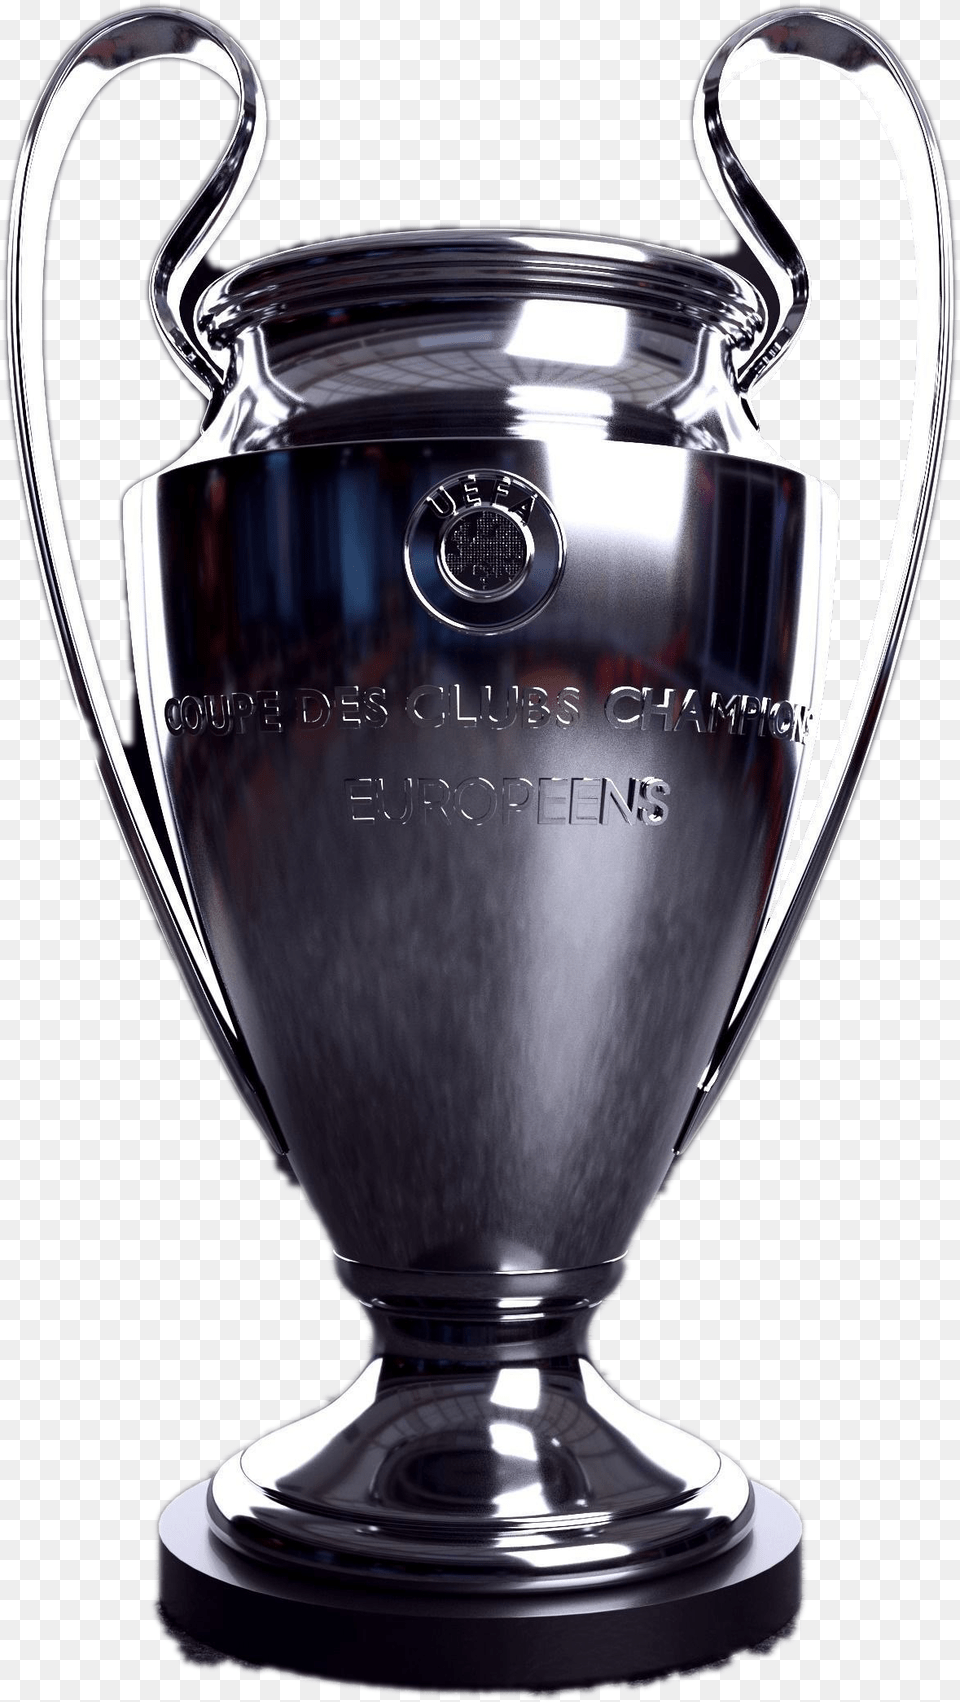 Uefa Champions League Trophy Background Uefa Champions League Trophy, Smoke Pipe Free Png Download